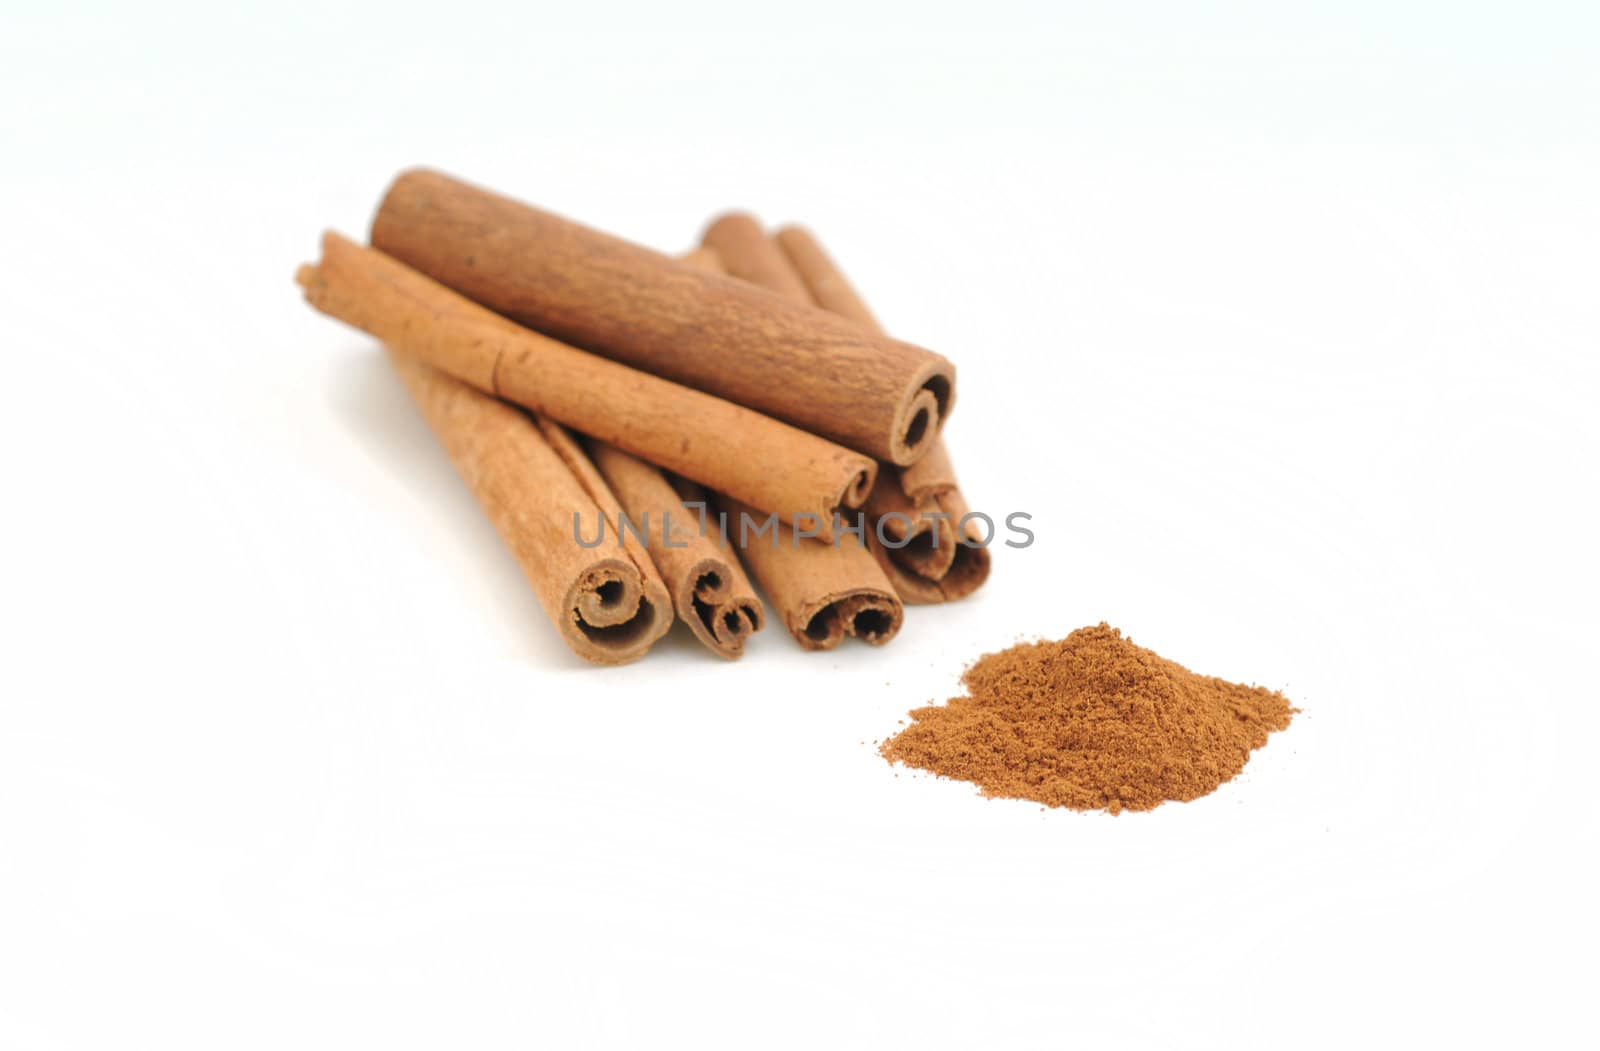 Cinnamon sticks and ground spices on white background